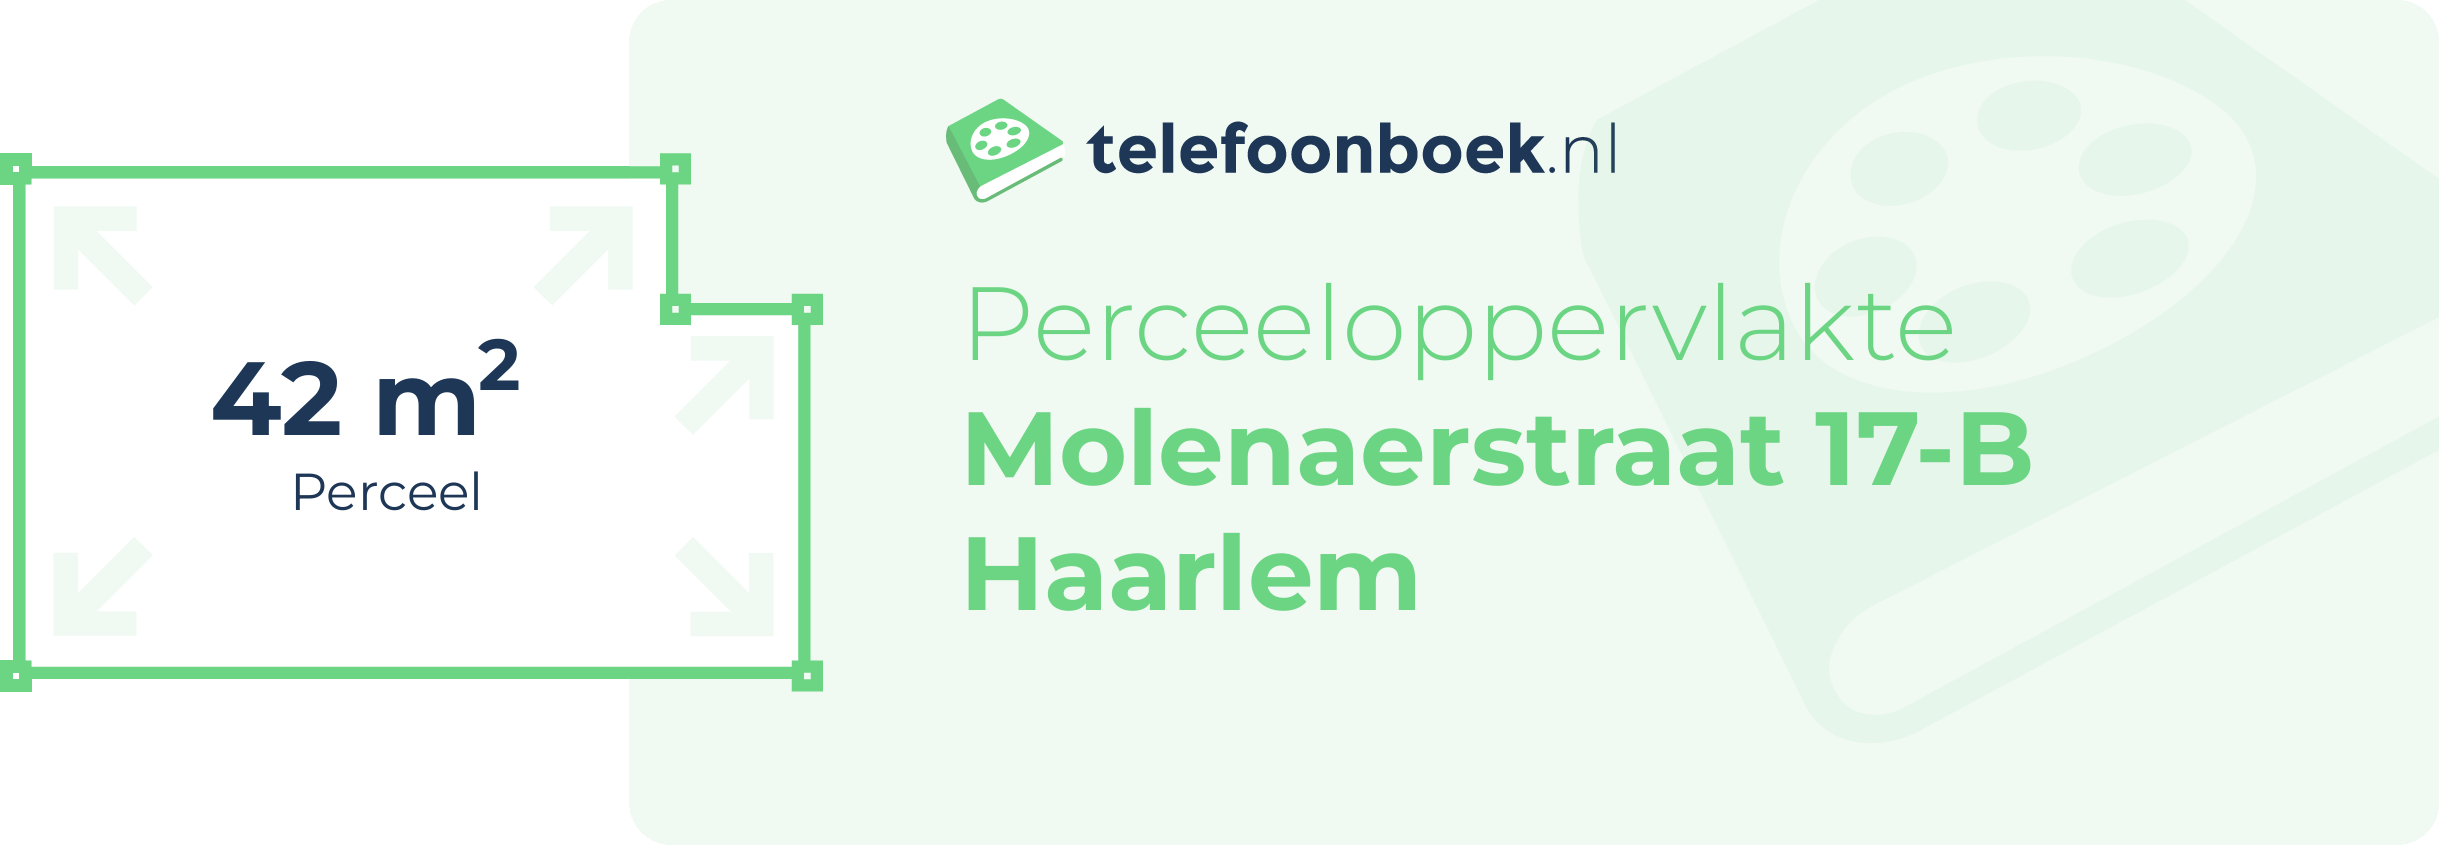 Perceeloppervlakte Molenaerstraat 17-B Haarlem